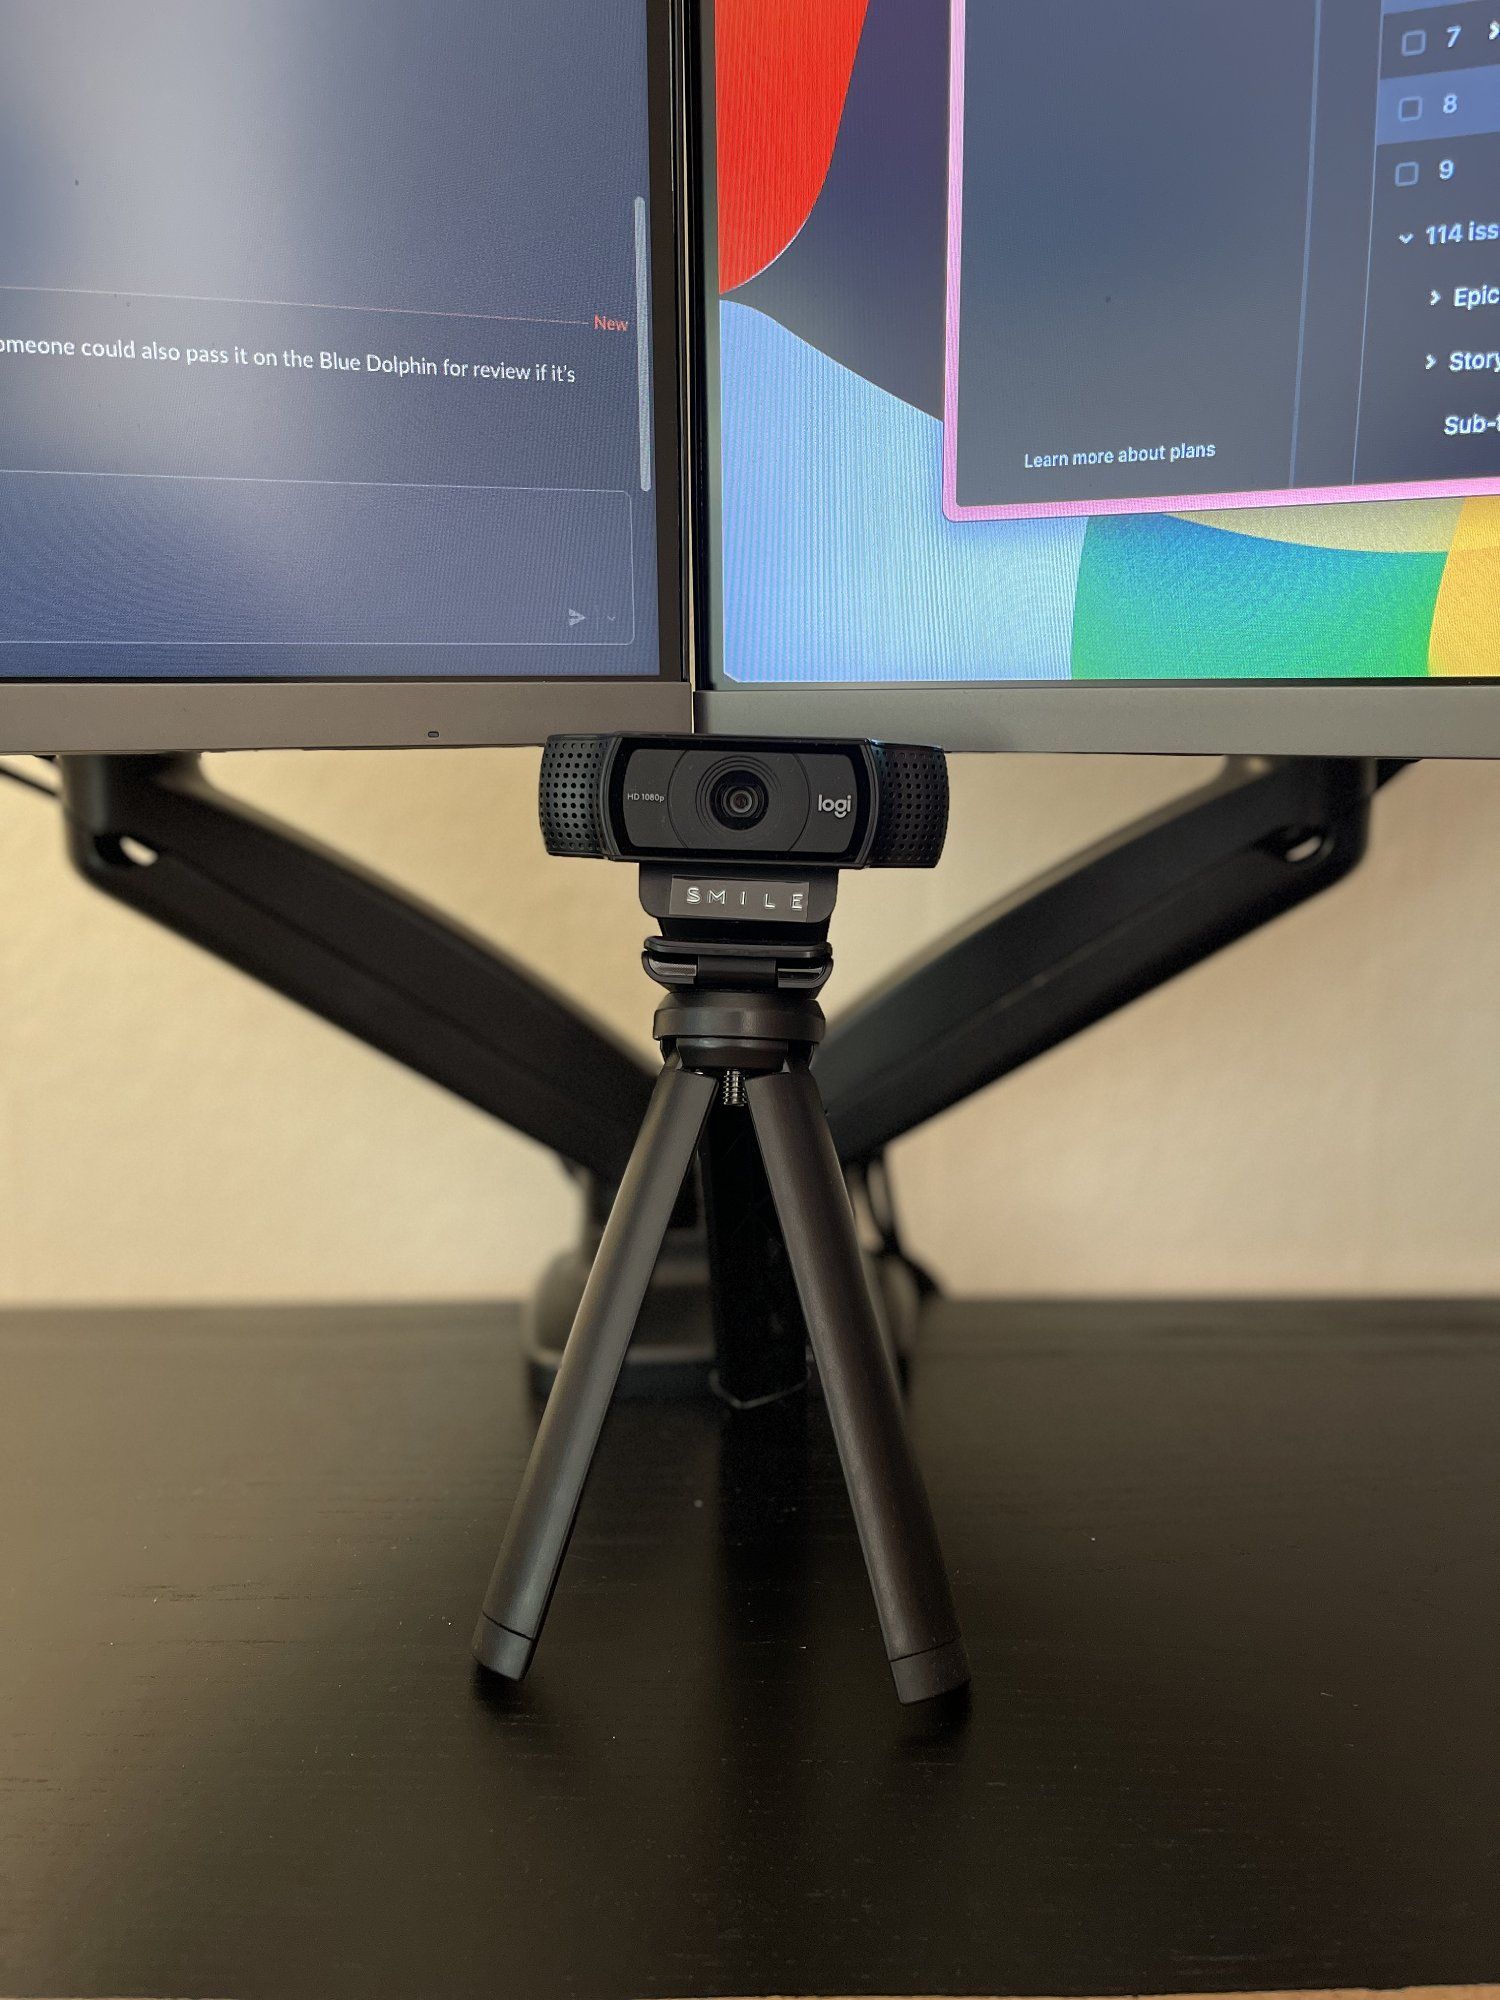 A Logitech webcam mounted on a tripod